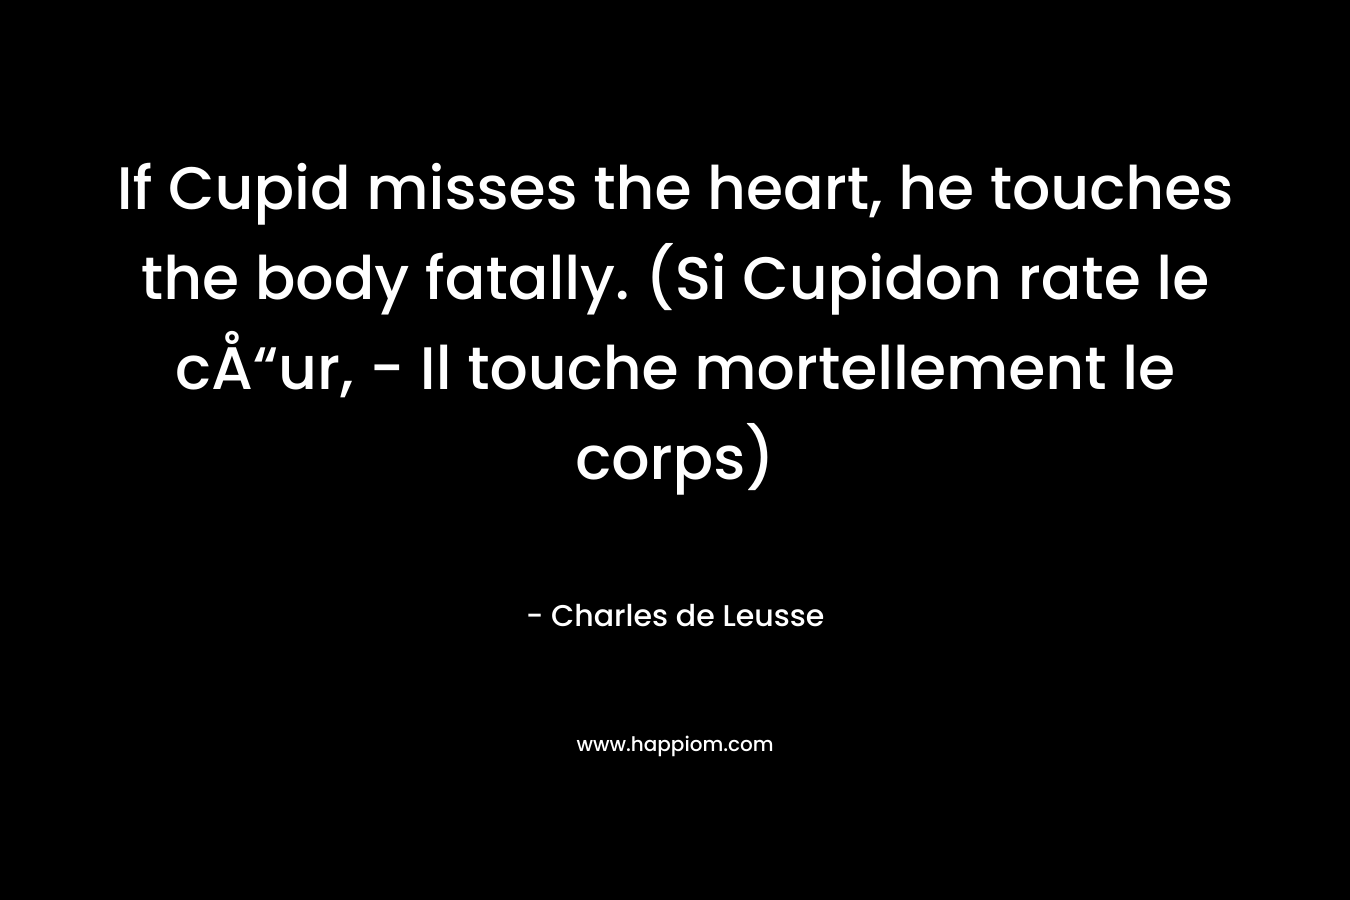 If Cupid misses the heart, he touches the body fatally. (Si Cupidon rate le cÅ“ur, – Il touche mortellement le corps) – Charles de Leusse